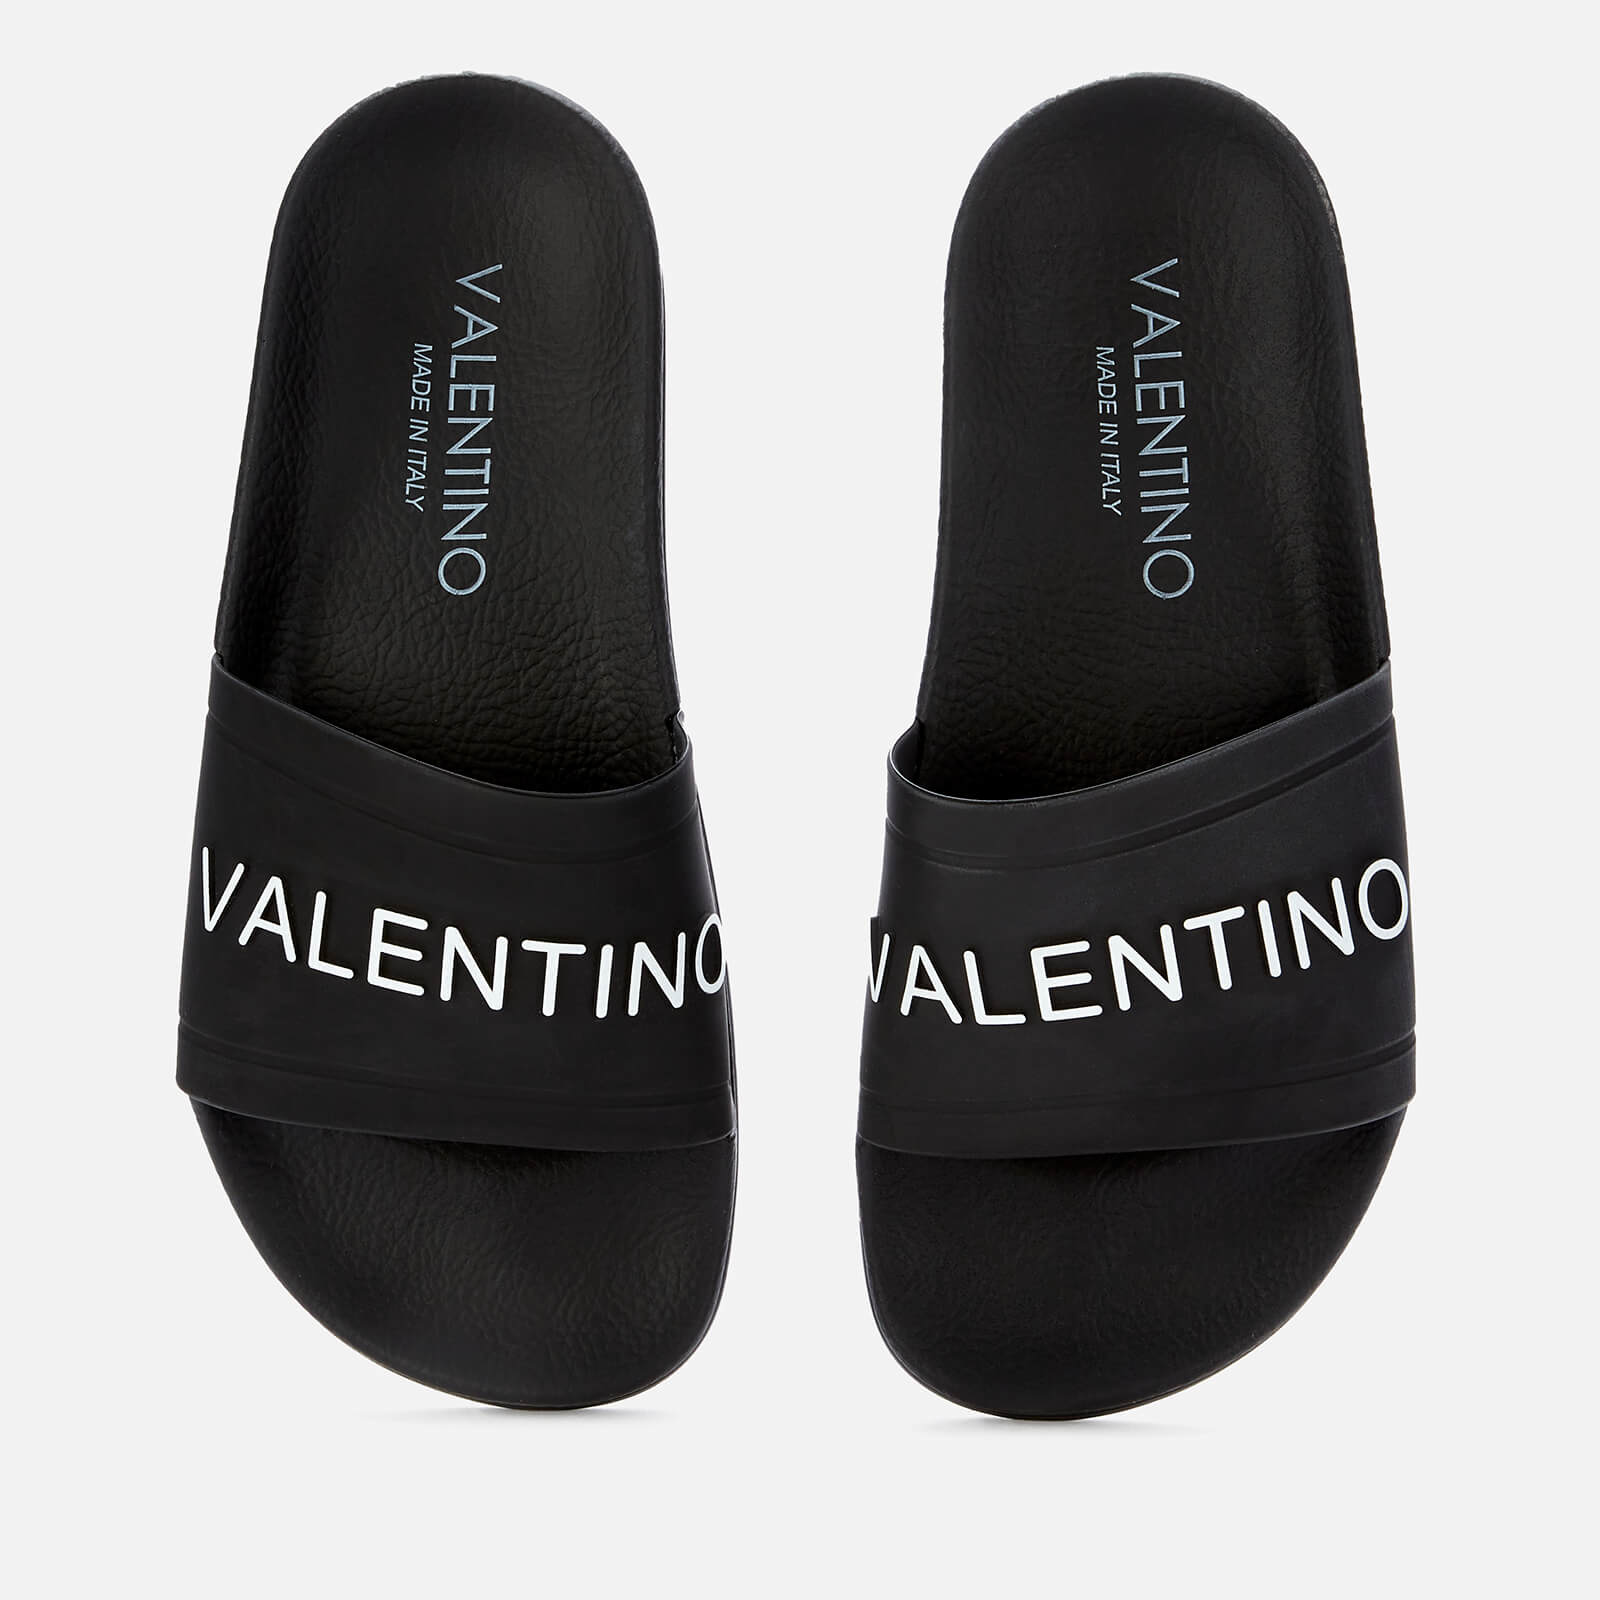 Valentino Shoes Women's Slide Sandals - Black - UK 4